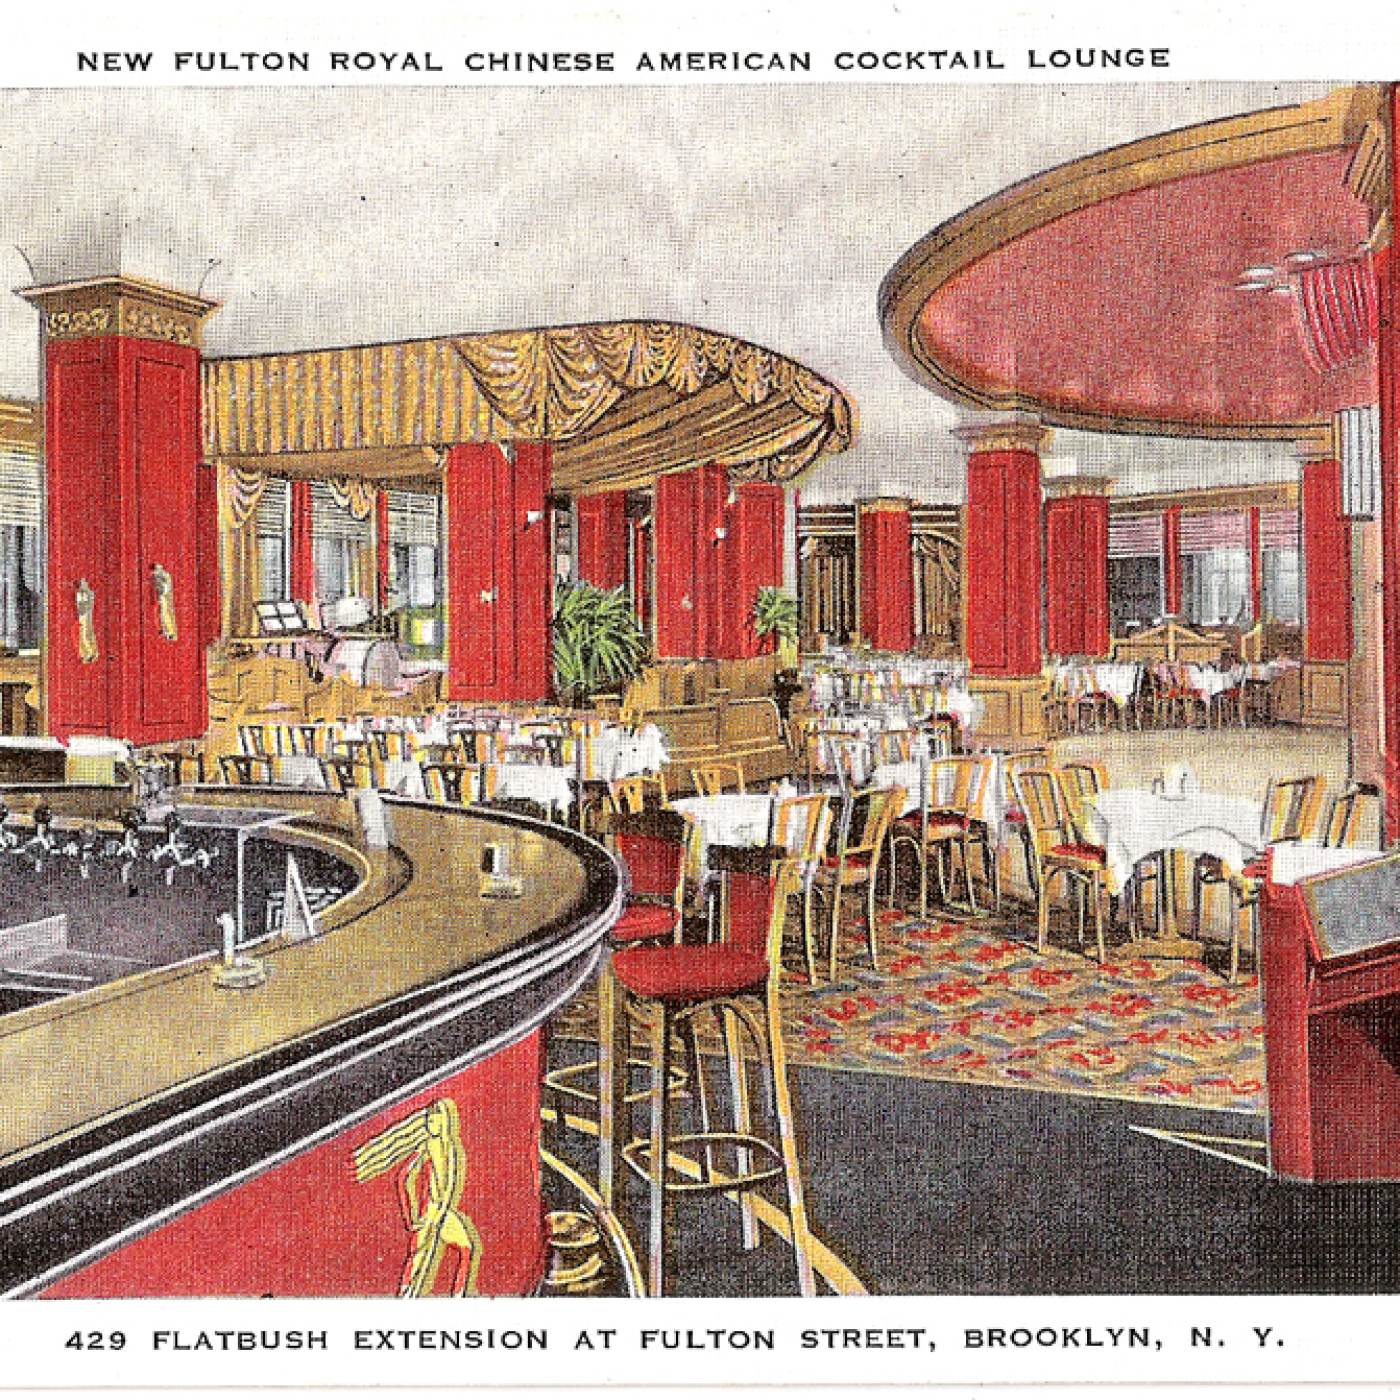 2015.043.351-a 这张明信片描绘了新富尔顿皇家中美鸡尾酒酒廊的内部，有马蹄形的酒吧、红色的柱子和围绕着舞池的餐桌。新富尔顿是在二战期间和之后的二十年中选择宣传和描述自己是华裔美国餐馆而不是中餐馆的众多餐厅之一。由 Eric Y. Ng 捐赠，美国华人博物馆 (MOCA) 馆藏。  